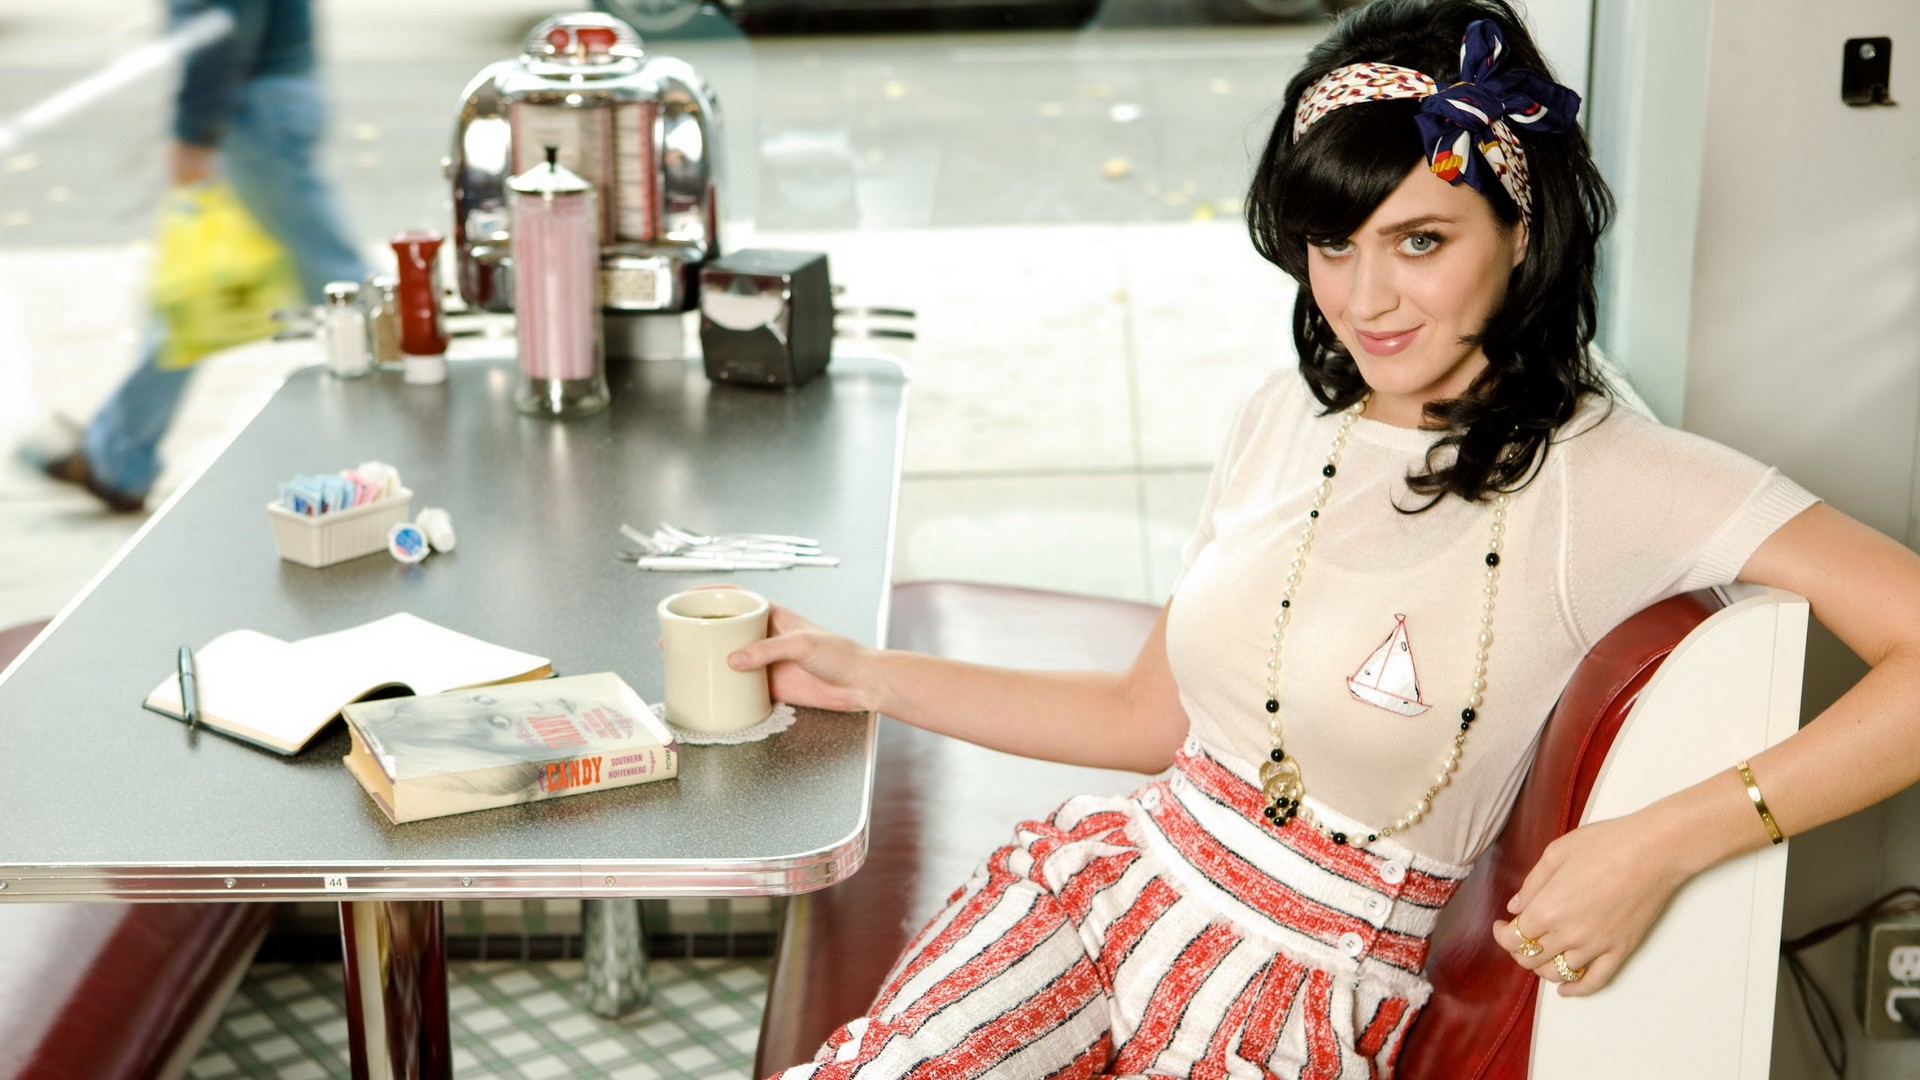 Descarga gratuita de fondo de pantalla para móvil de Música, Katy Perry.